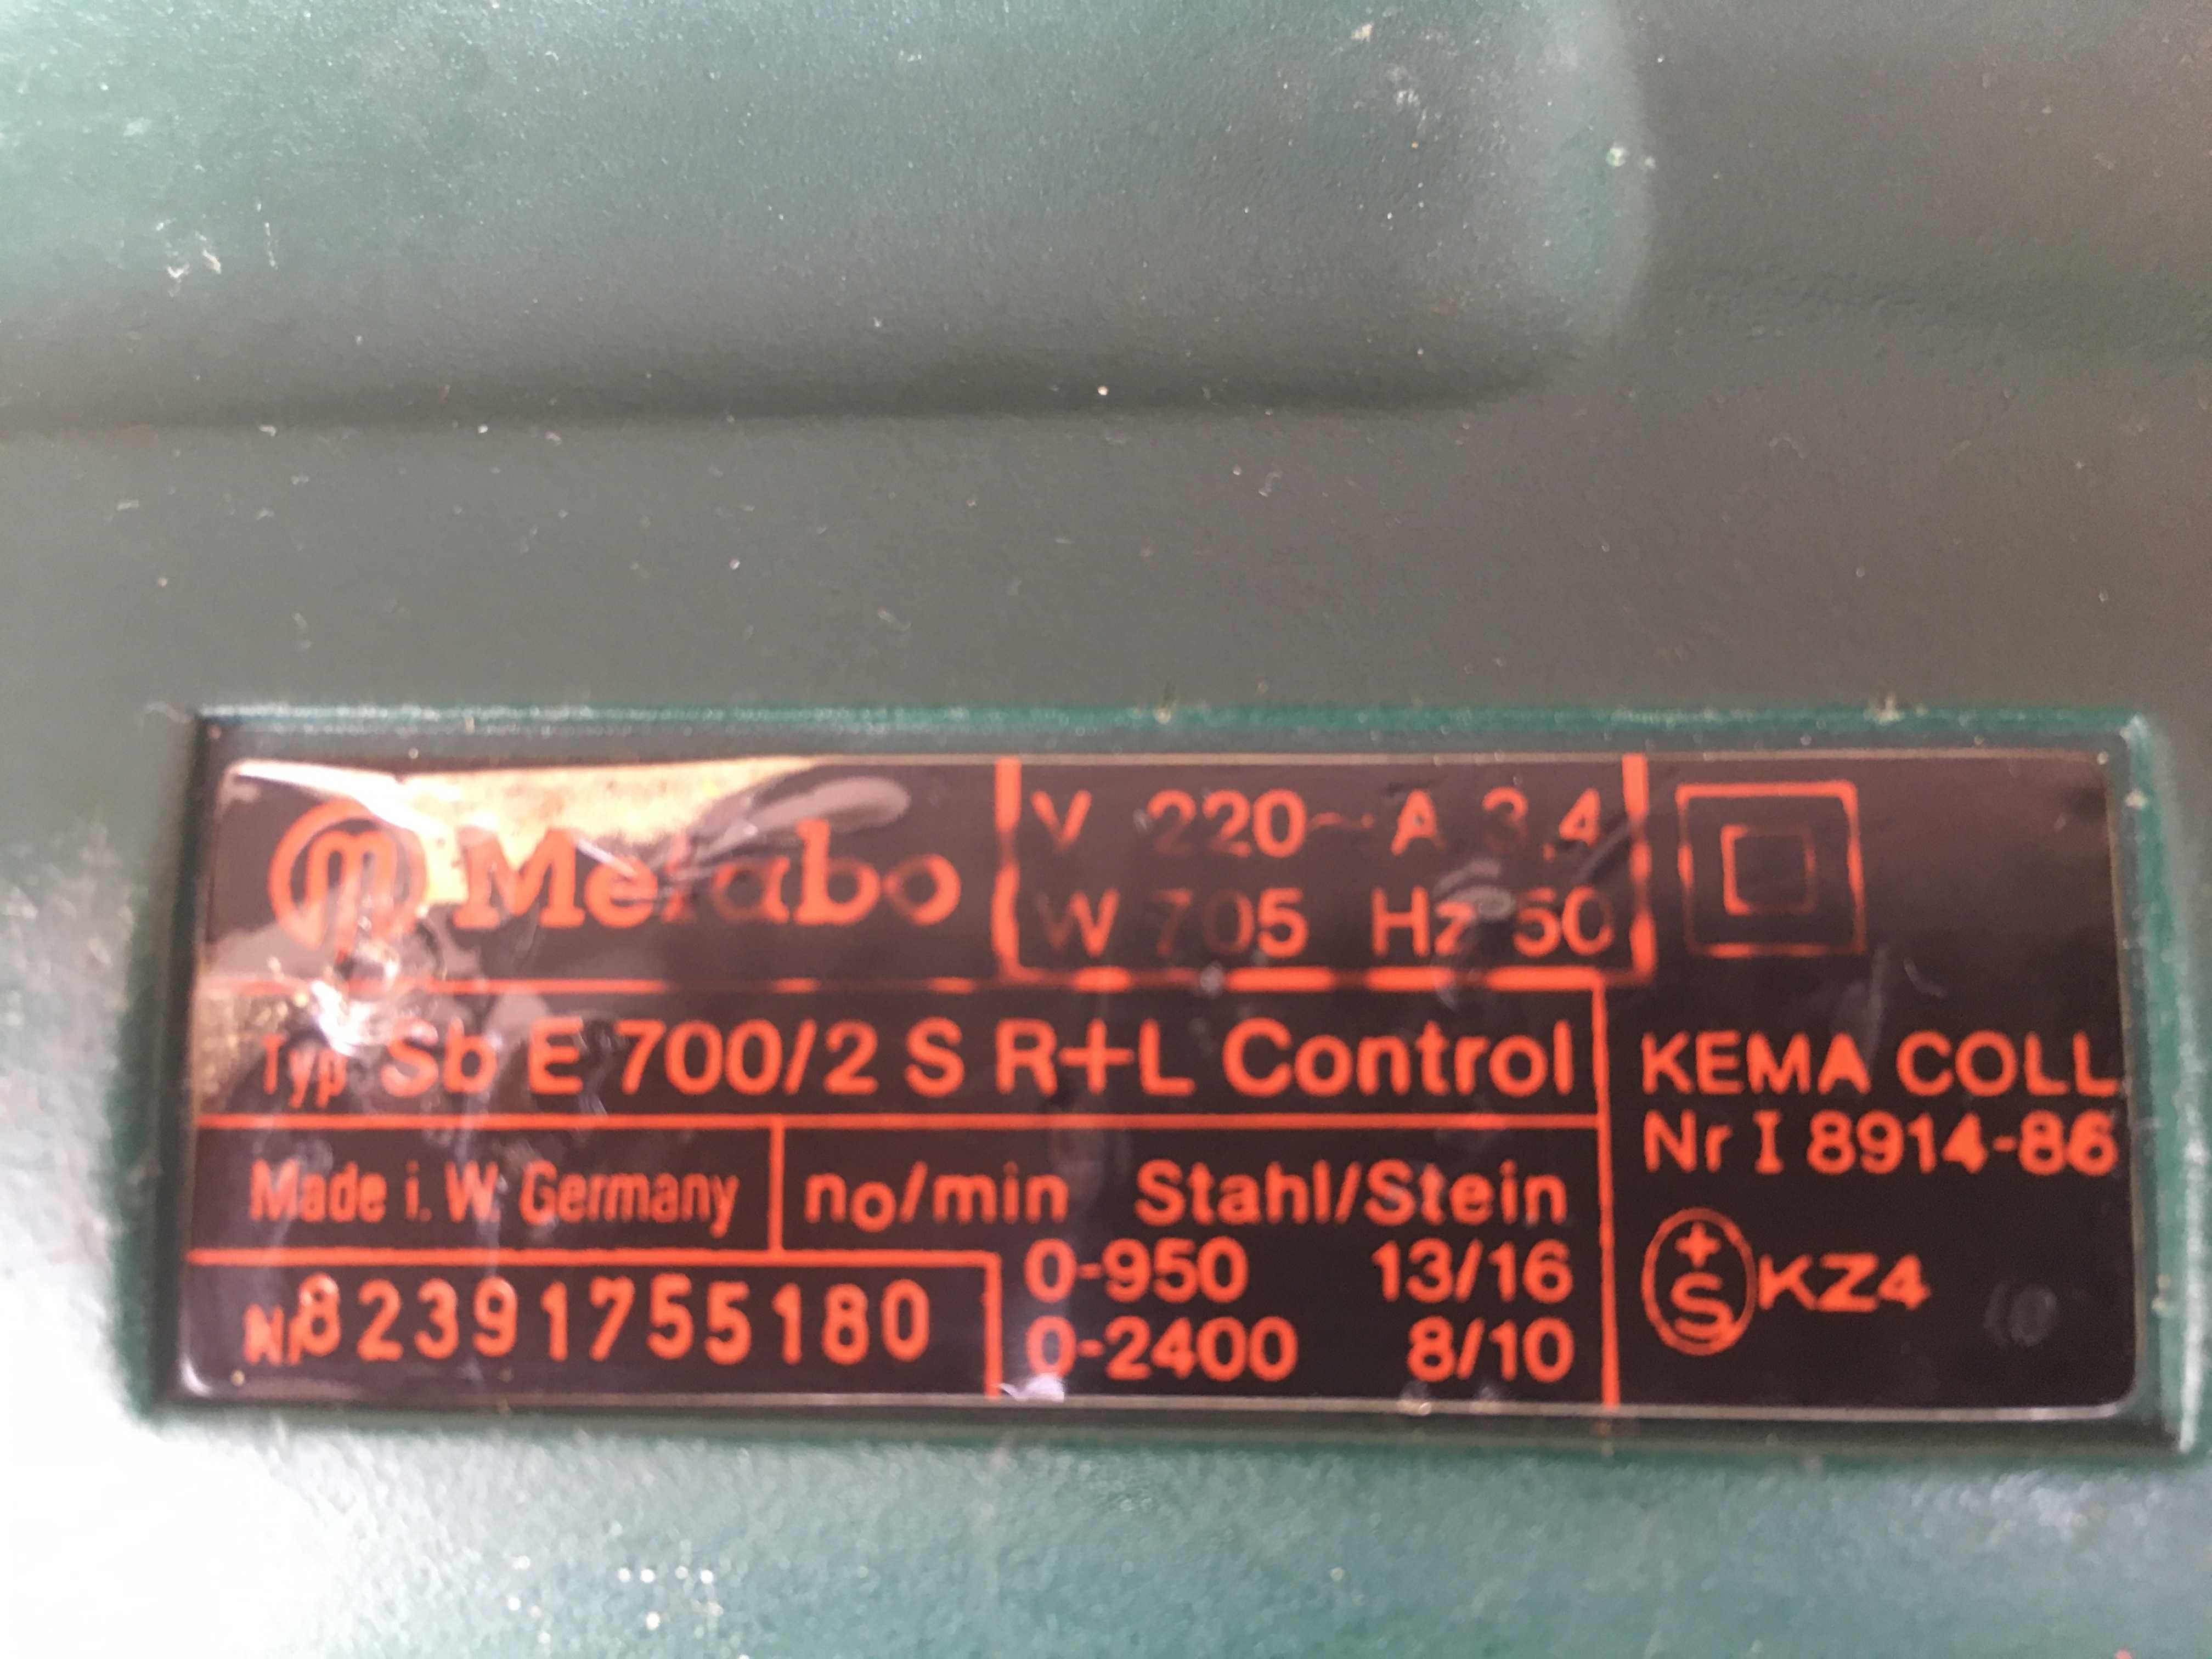 Wiertarka Metabo SbE 700/2 S R+L 705 wat regulacja wkręcania